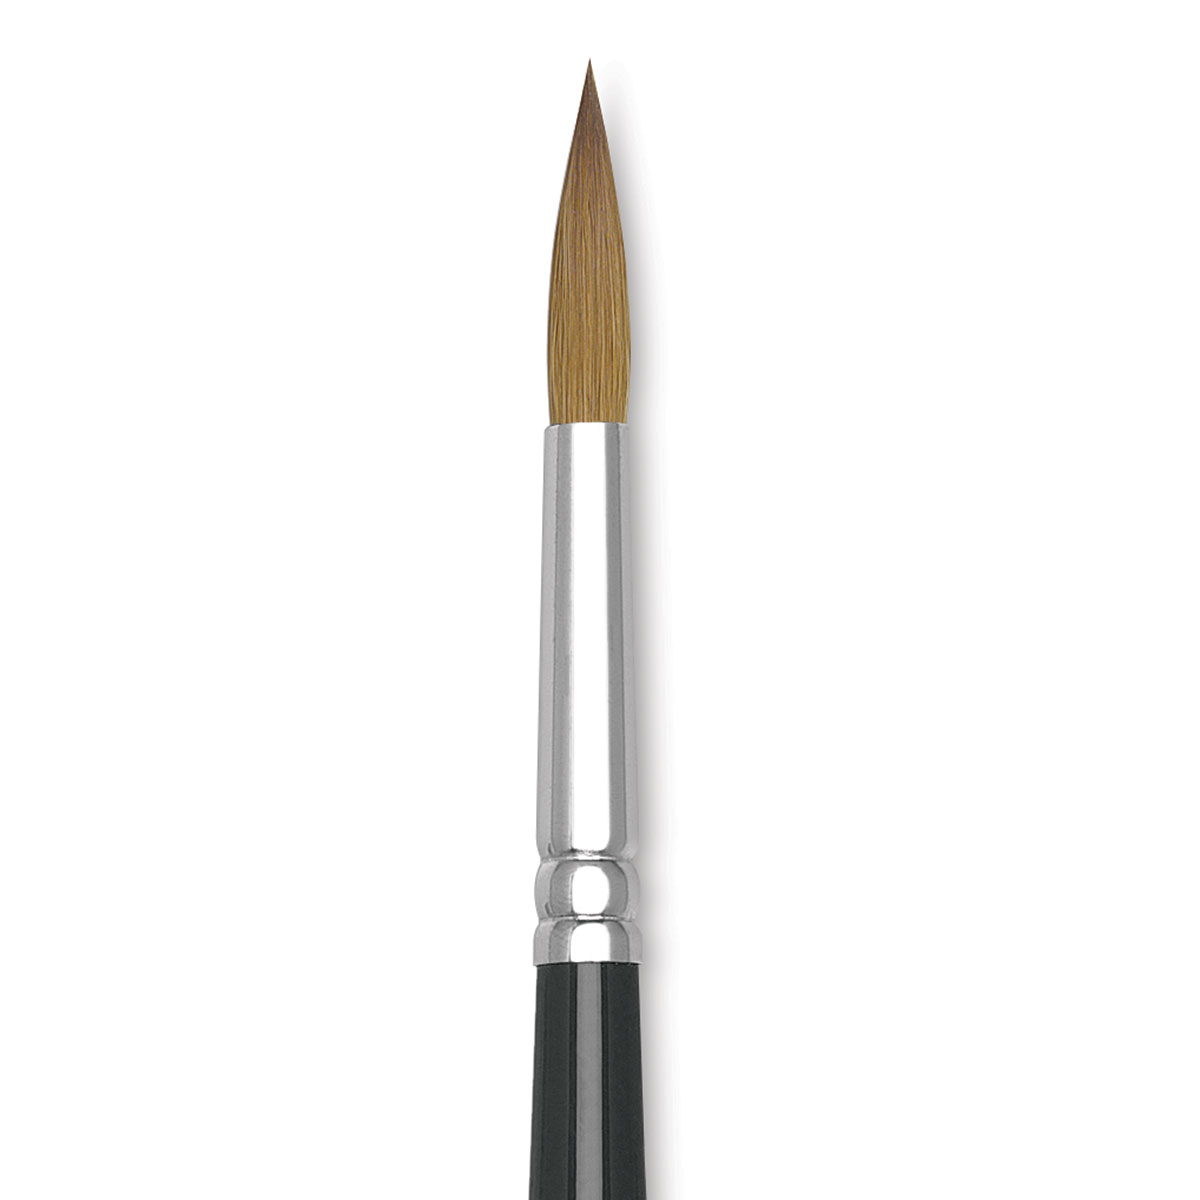 Winsor & Newton brush series 7 - kolinsky sable - round - short handle -  Schleiper - Complete online catalogue